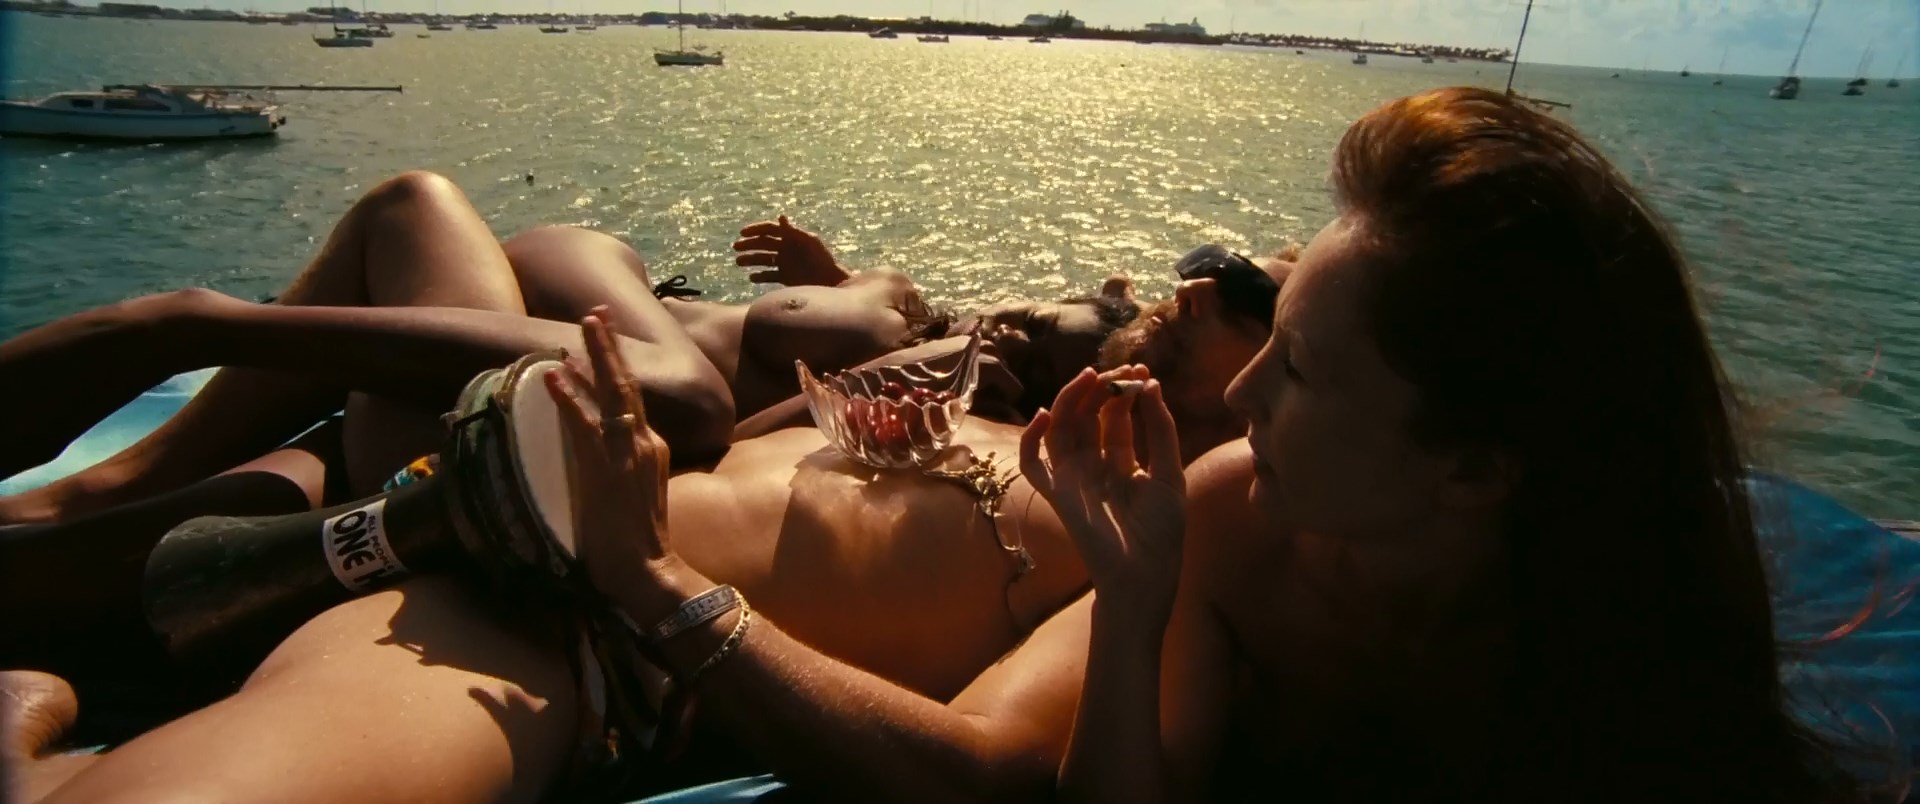 The Beach Movie Nudity - Watch Online - Isla Fisher, etc - The Beach Bum (2019) HD 1080p